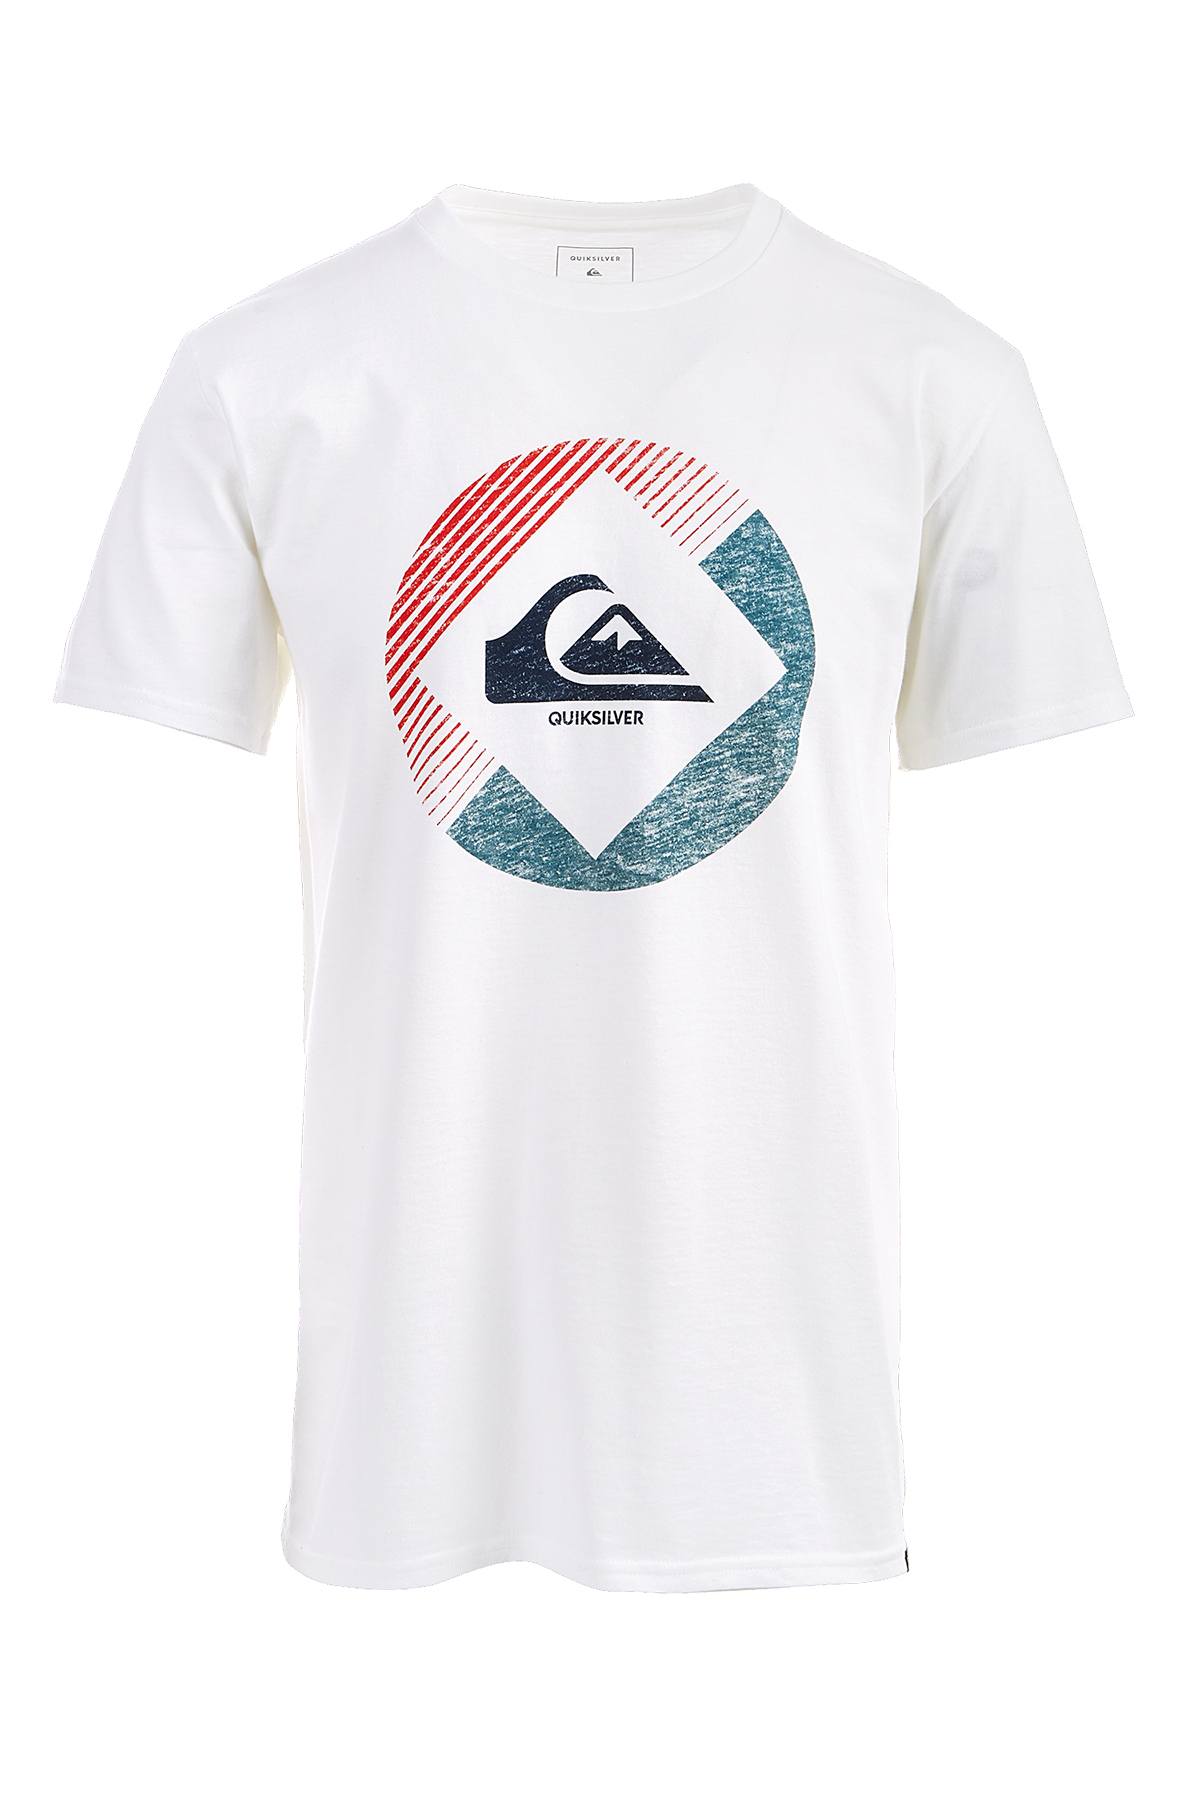 Quiksilver White Hot-Plate Graphic-Print T-Shirt | CheapUndies